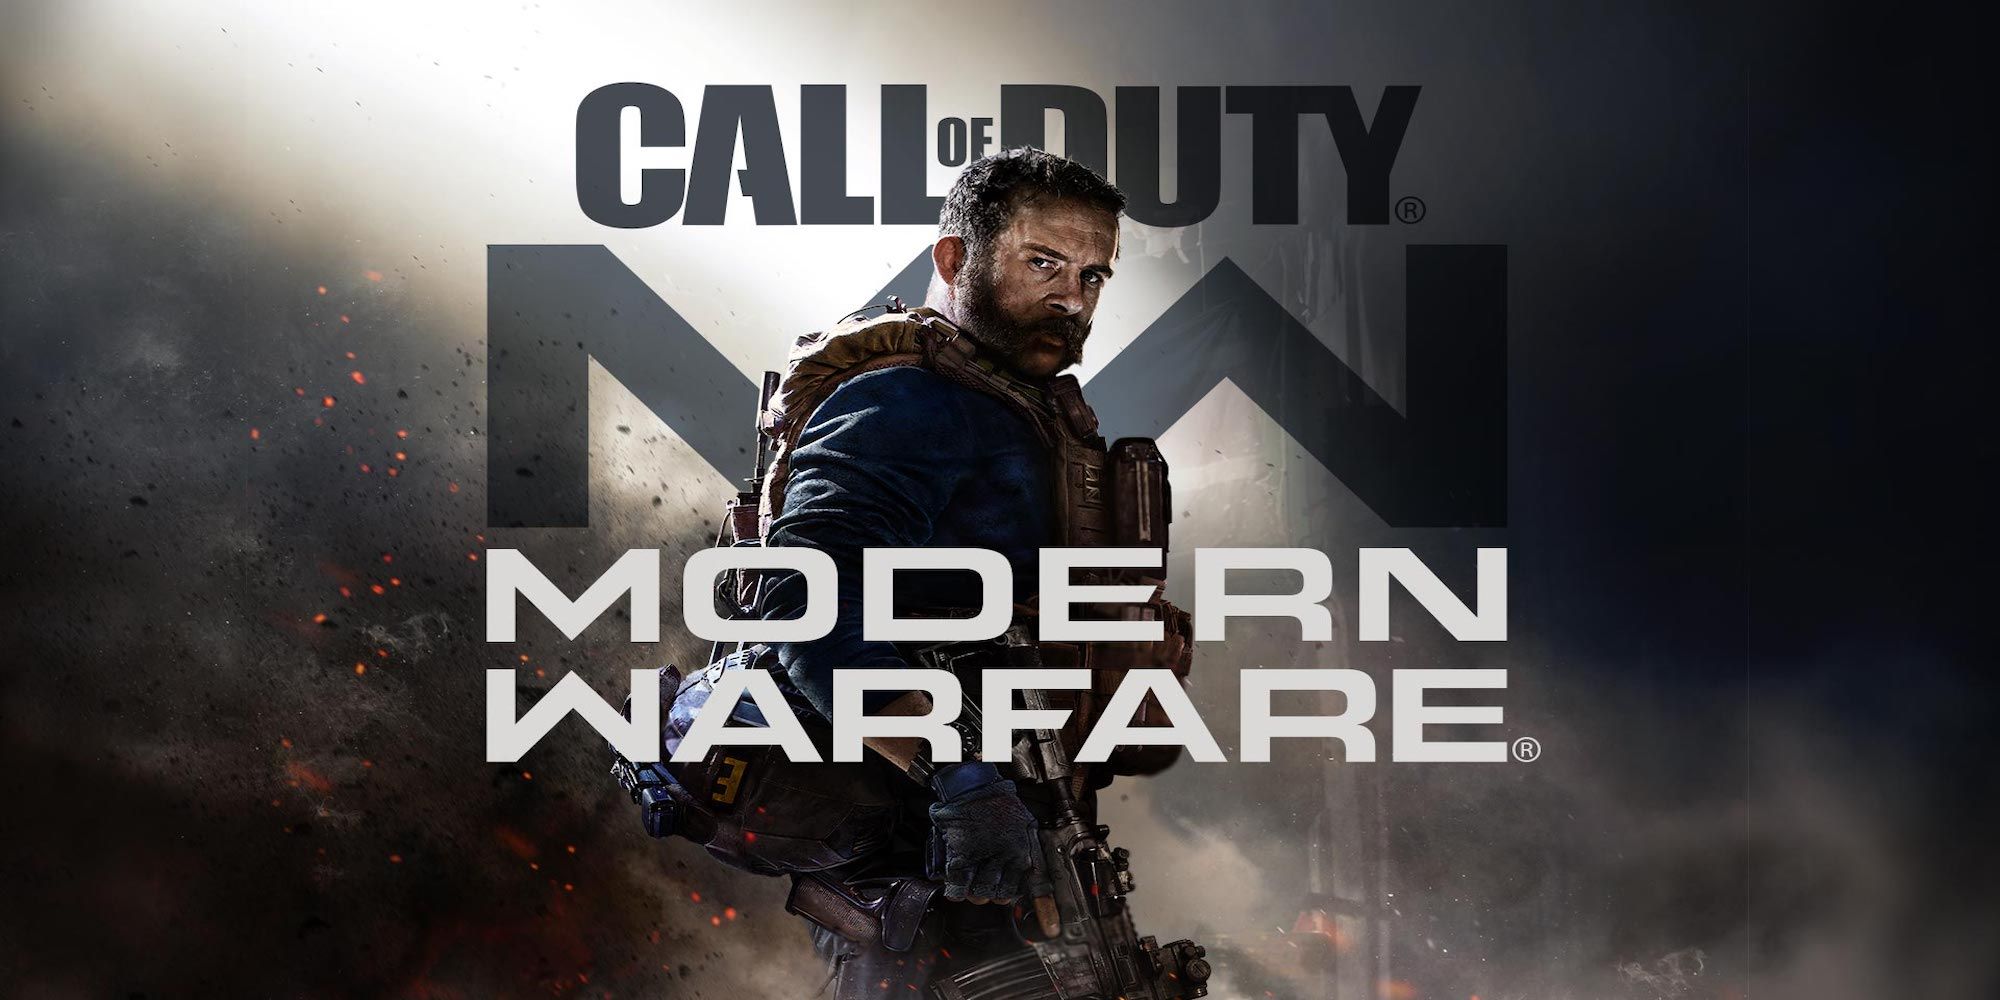 Title screen for Call of Duty: Modern Warfare (2019)